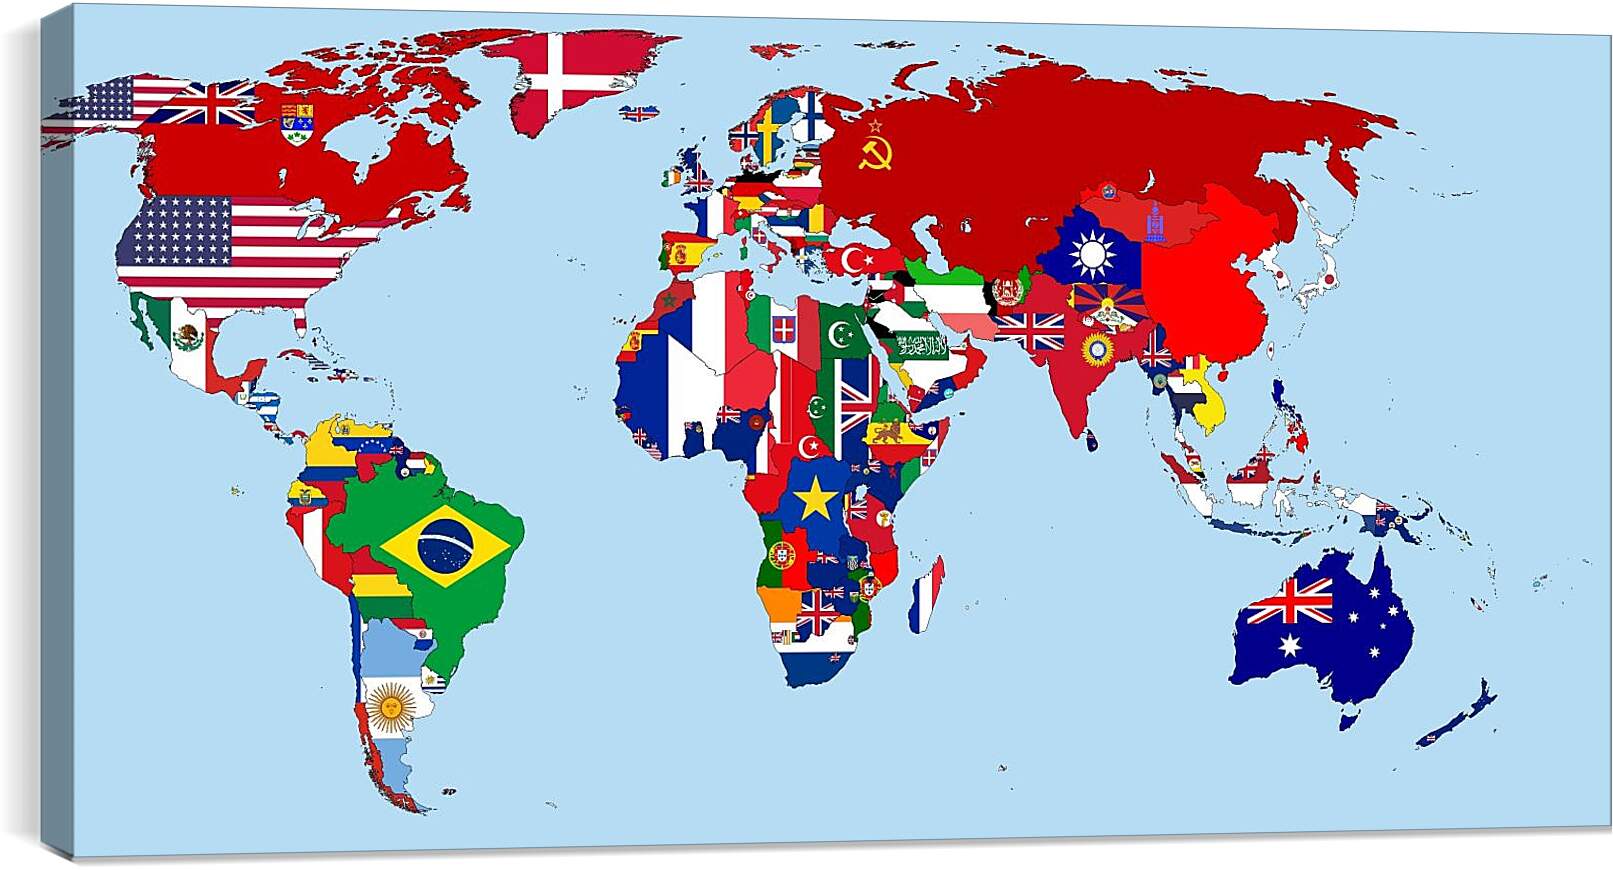 Постер и плакат - Карта мира с флагами стран 1930 год